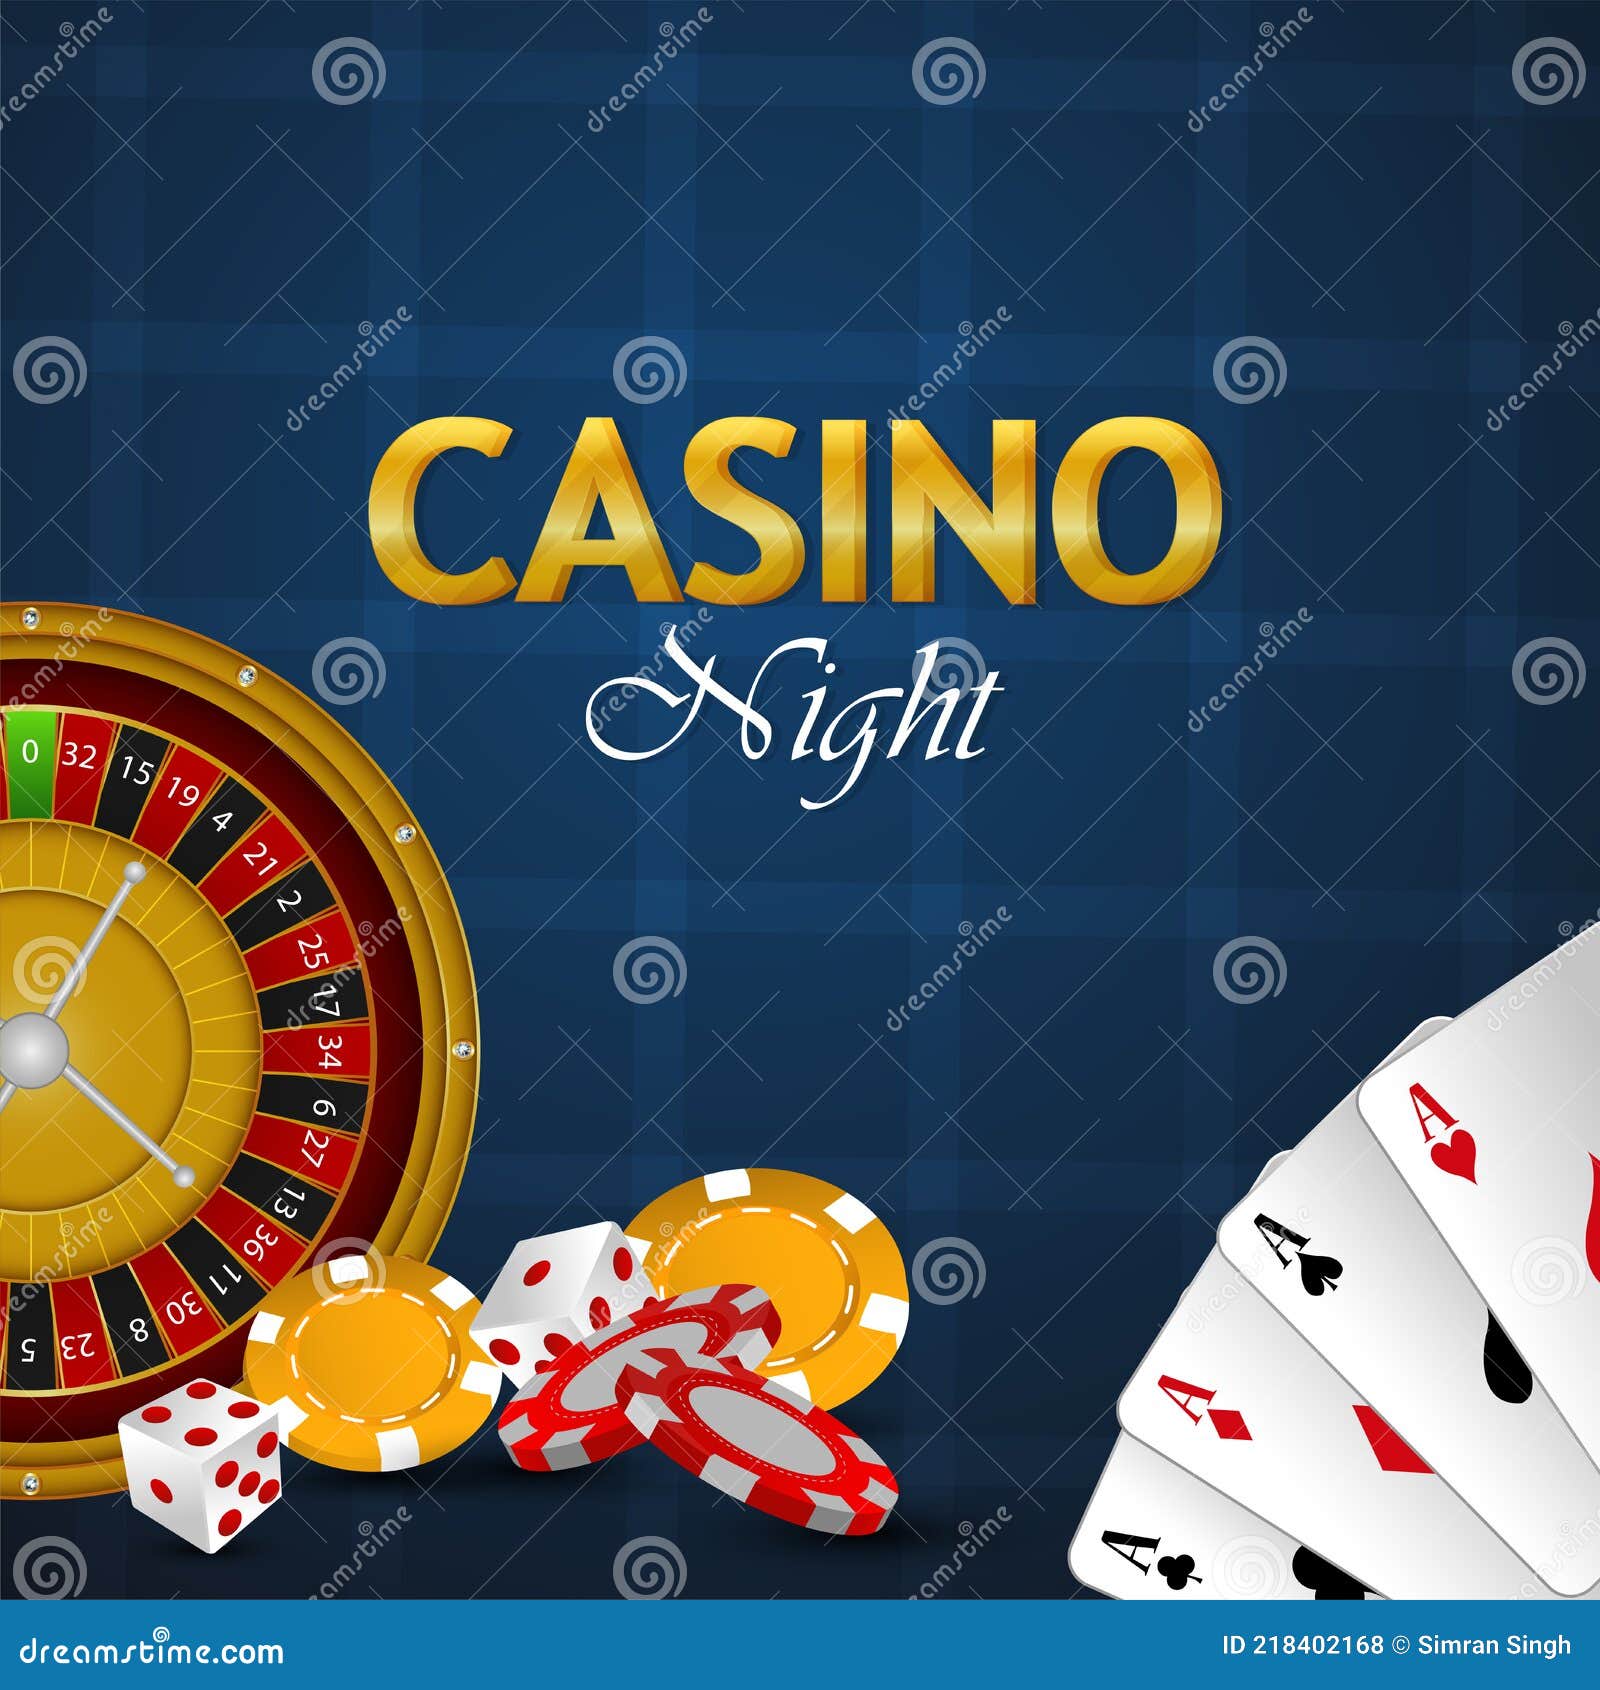 11 Methods Of online casino Domination